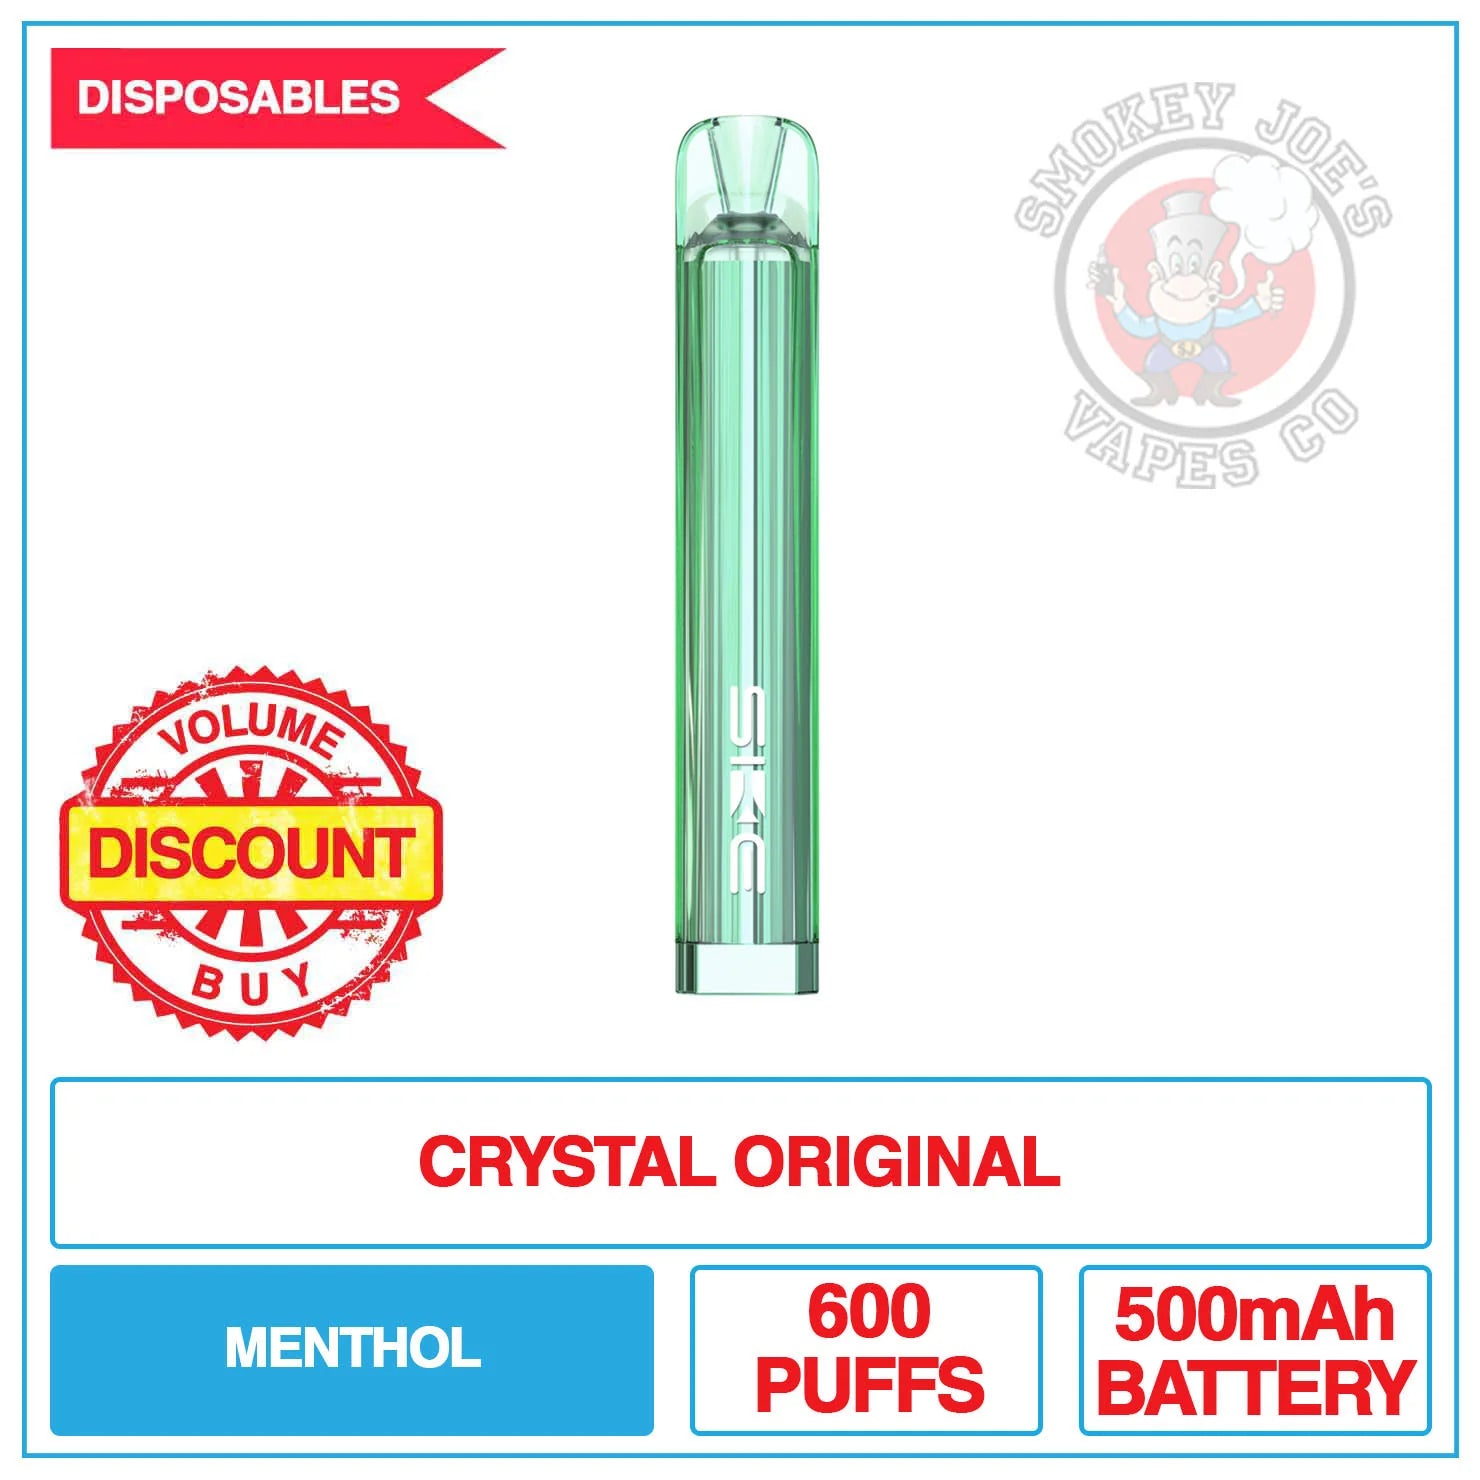 Crystal Original Menthol | Smokey Joes Vapes Co